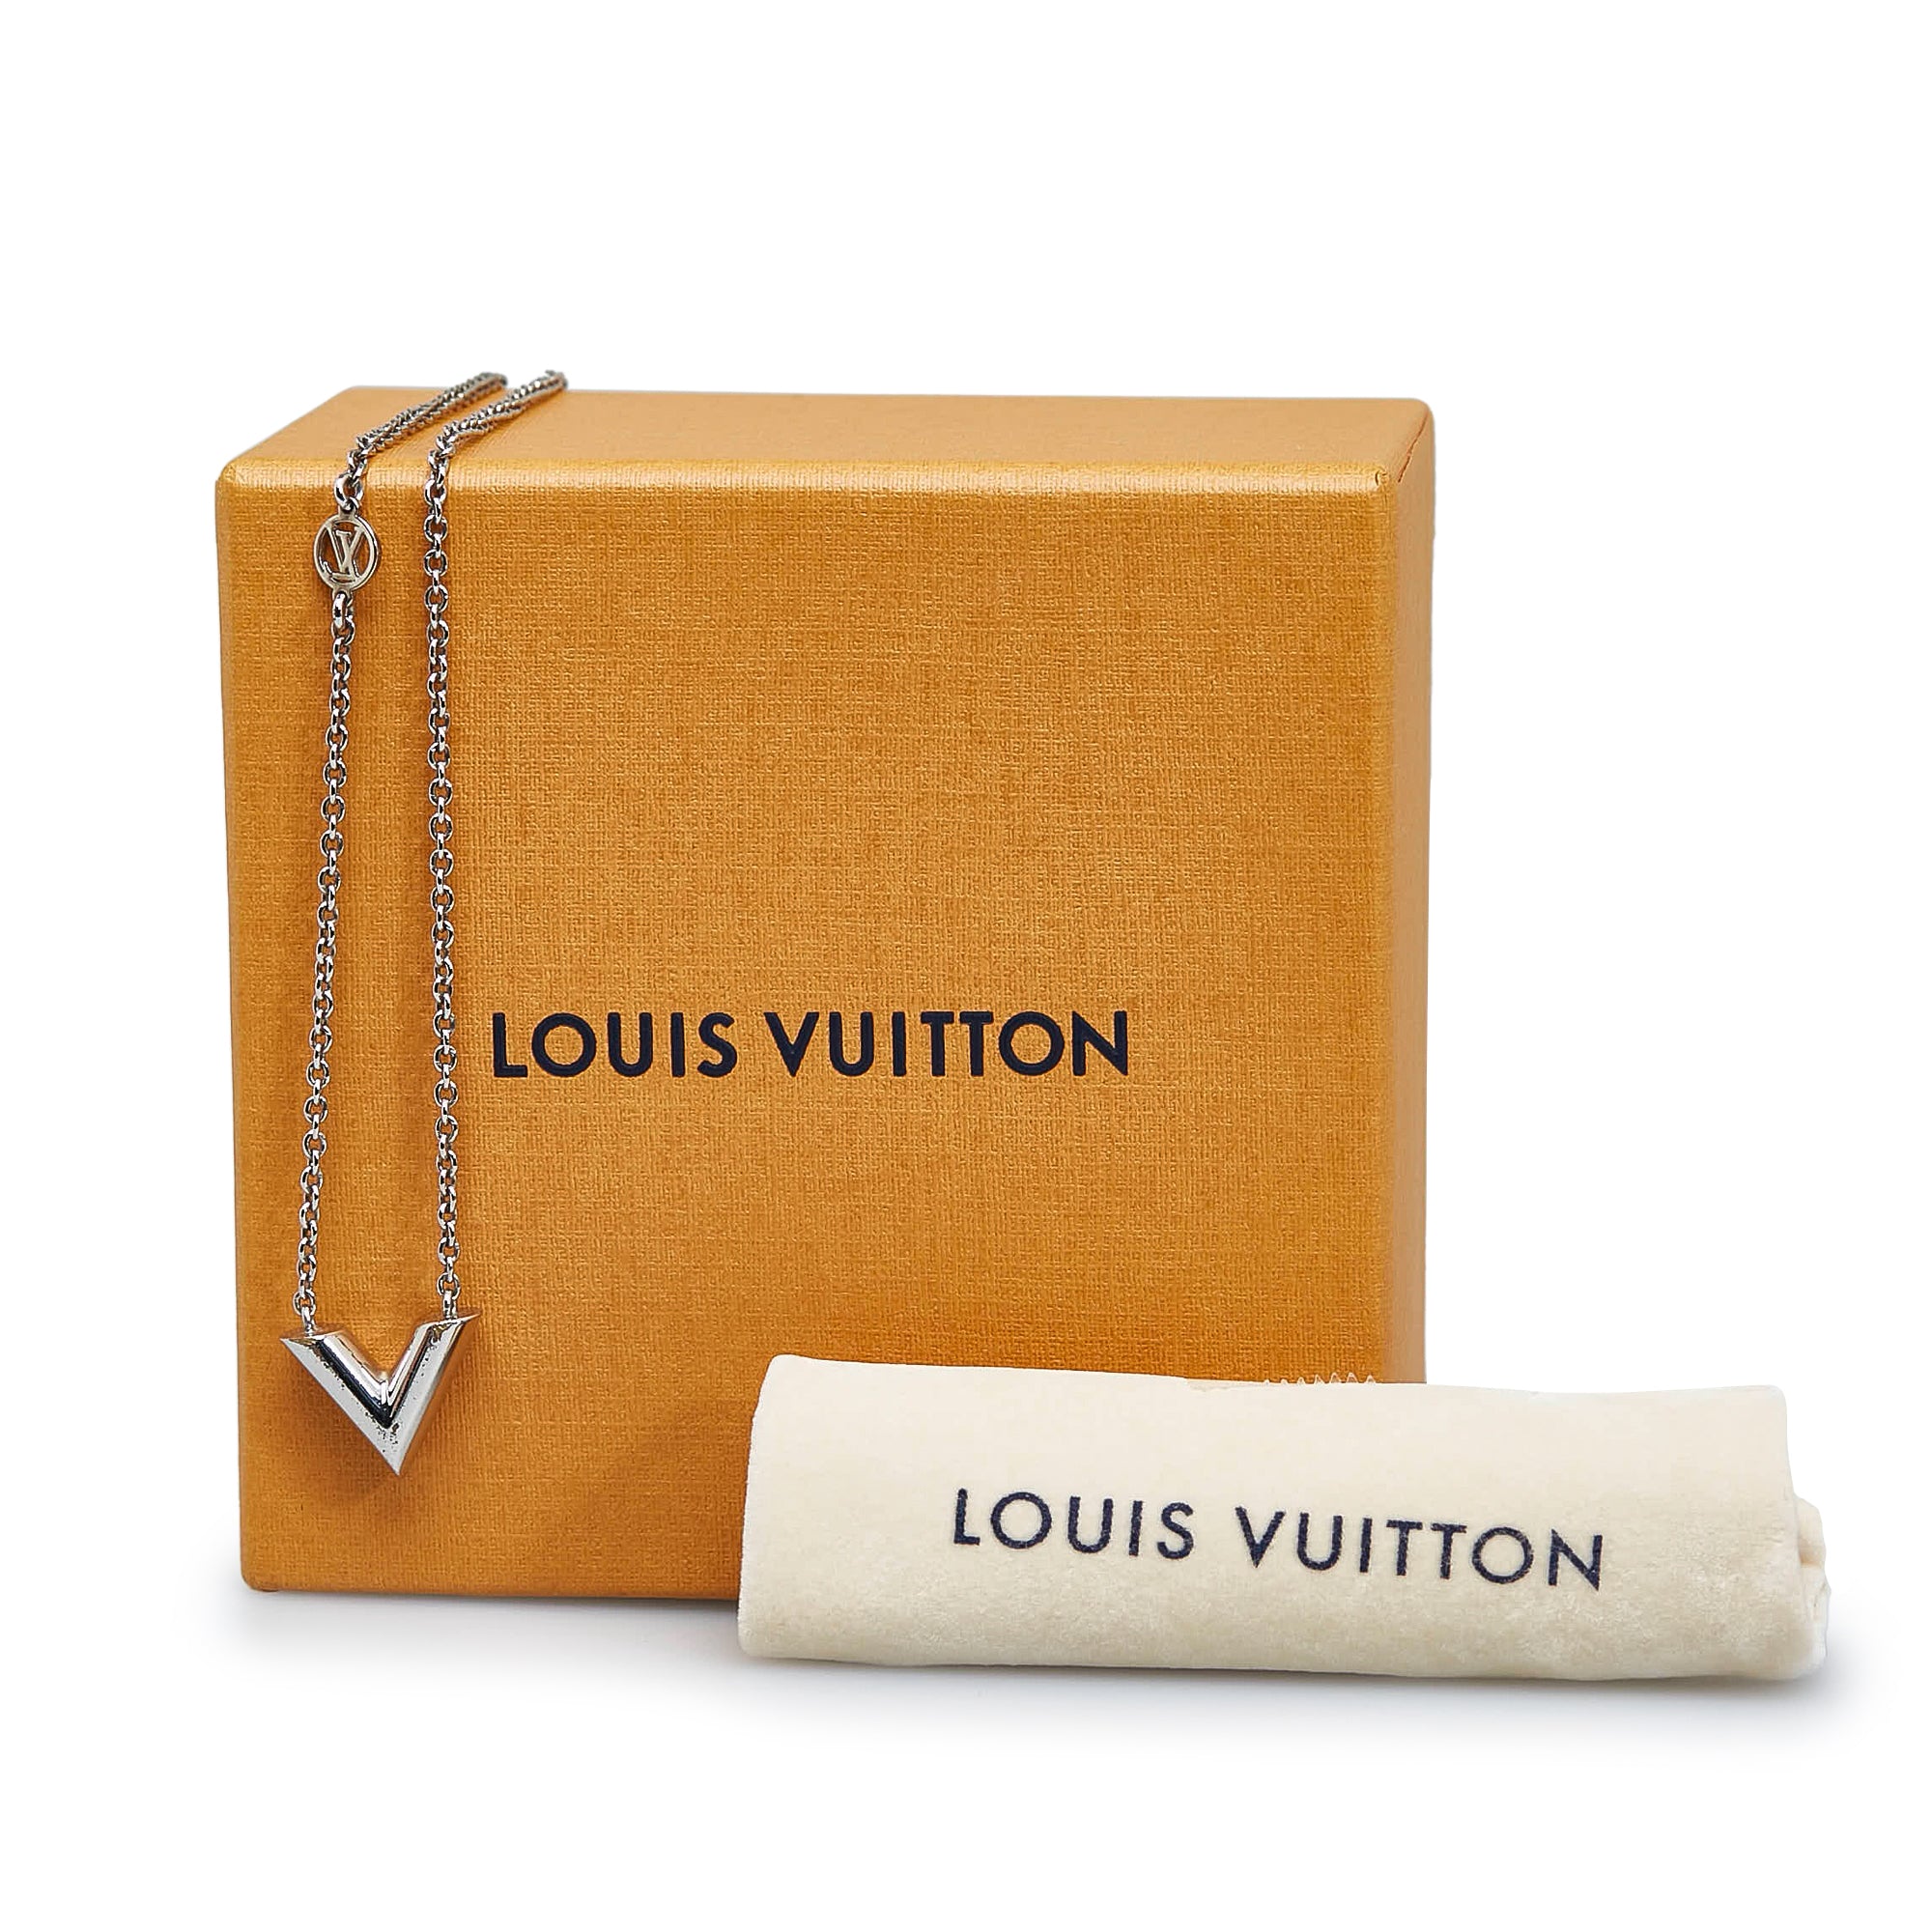 Louis Vuitton, Jewelry, Louis Vuitton Large Essential V Gold Tone Necklace